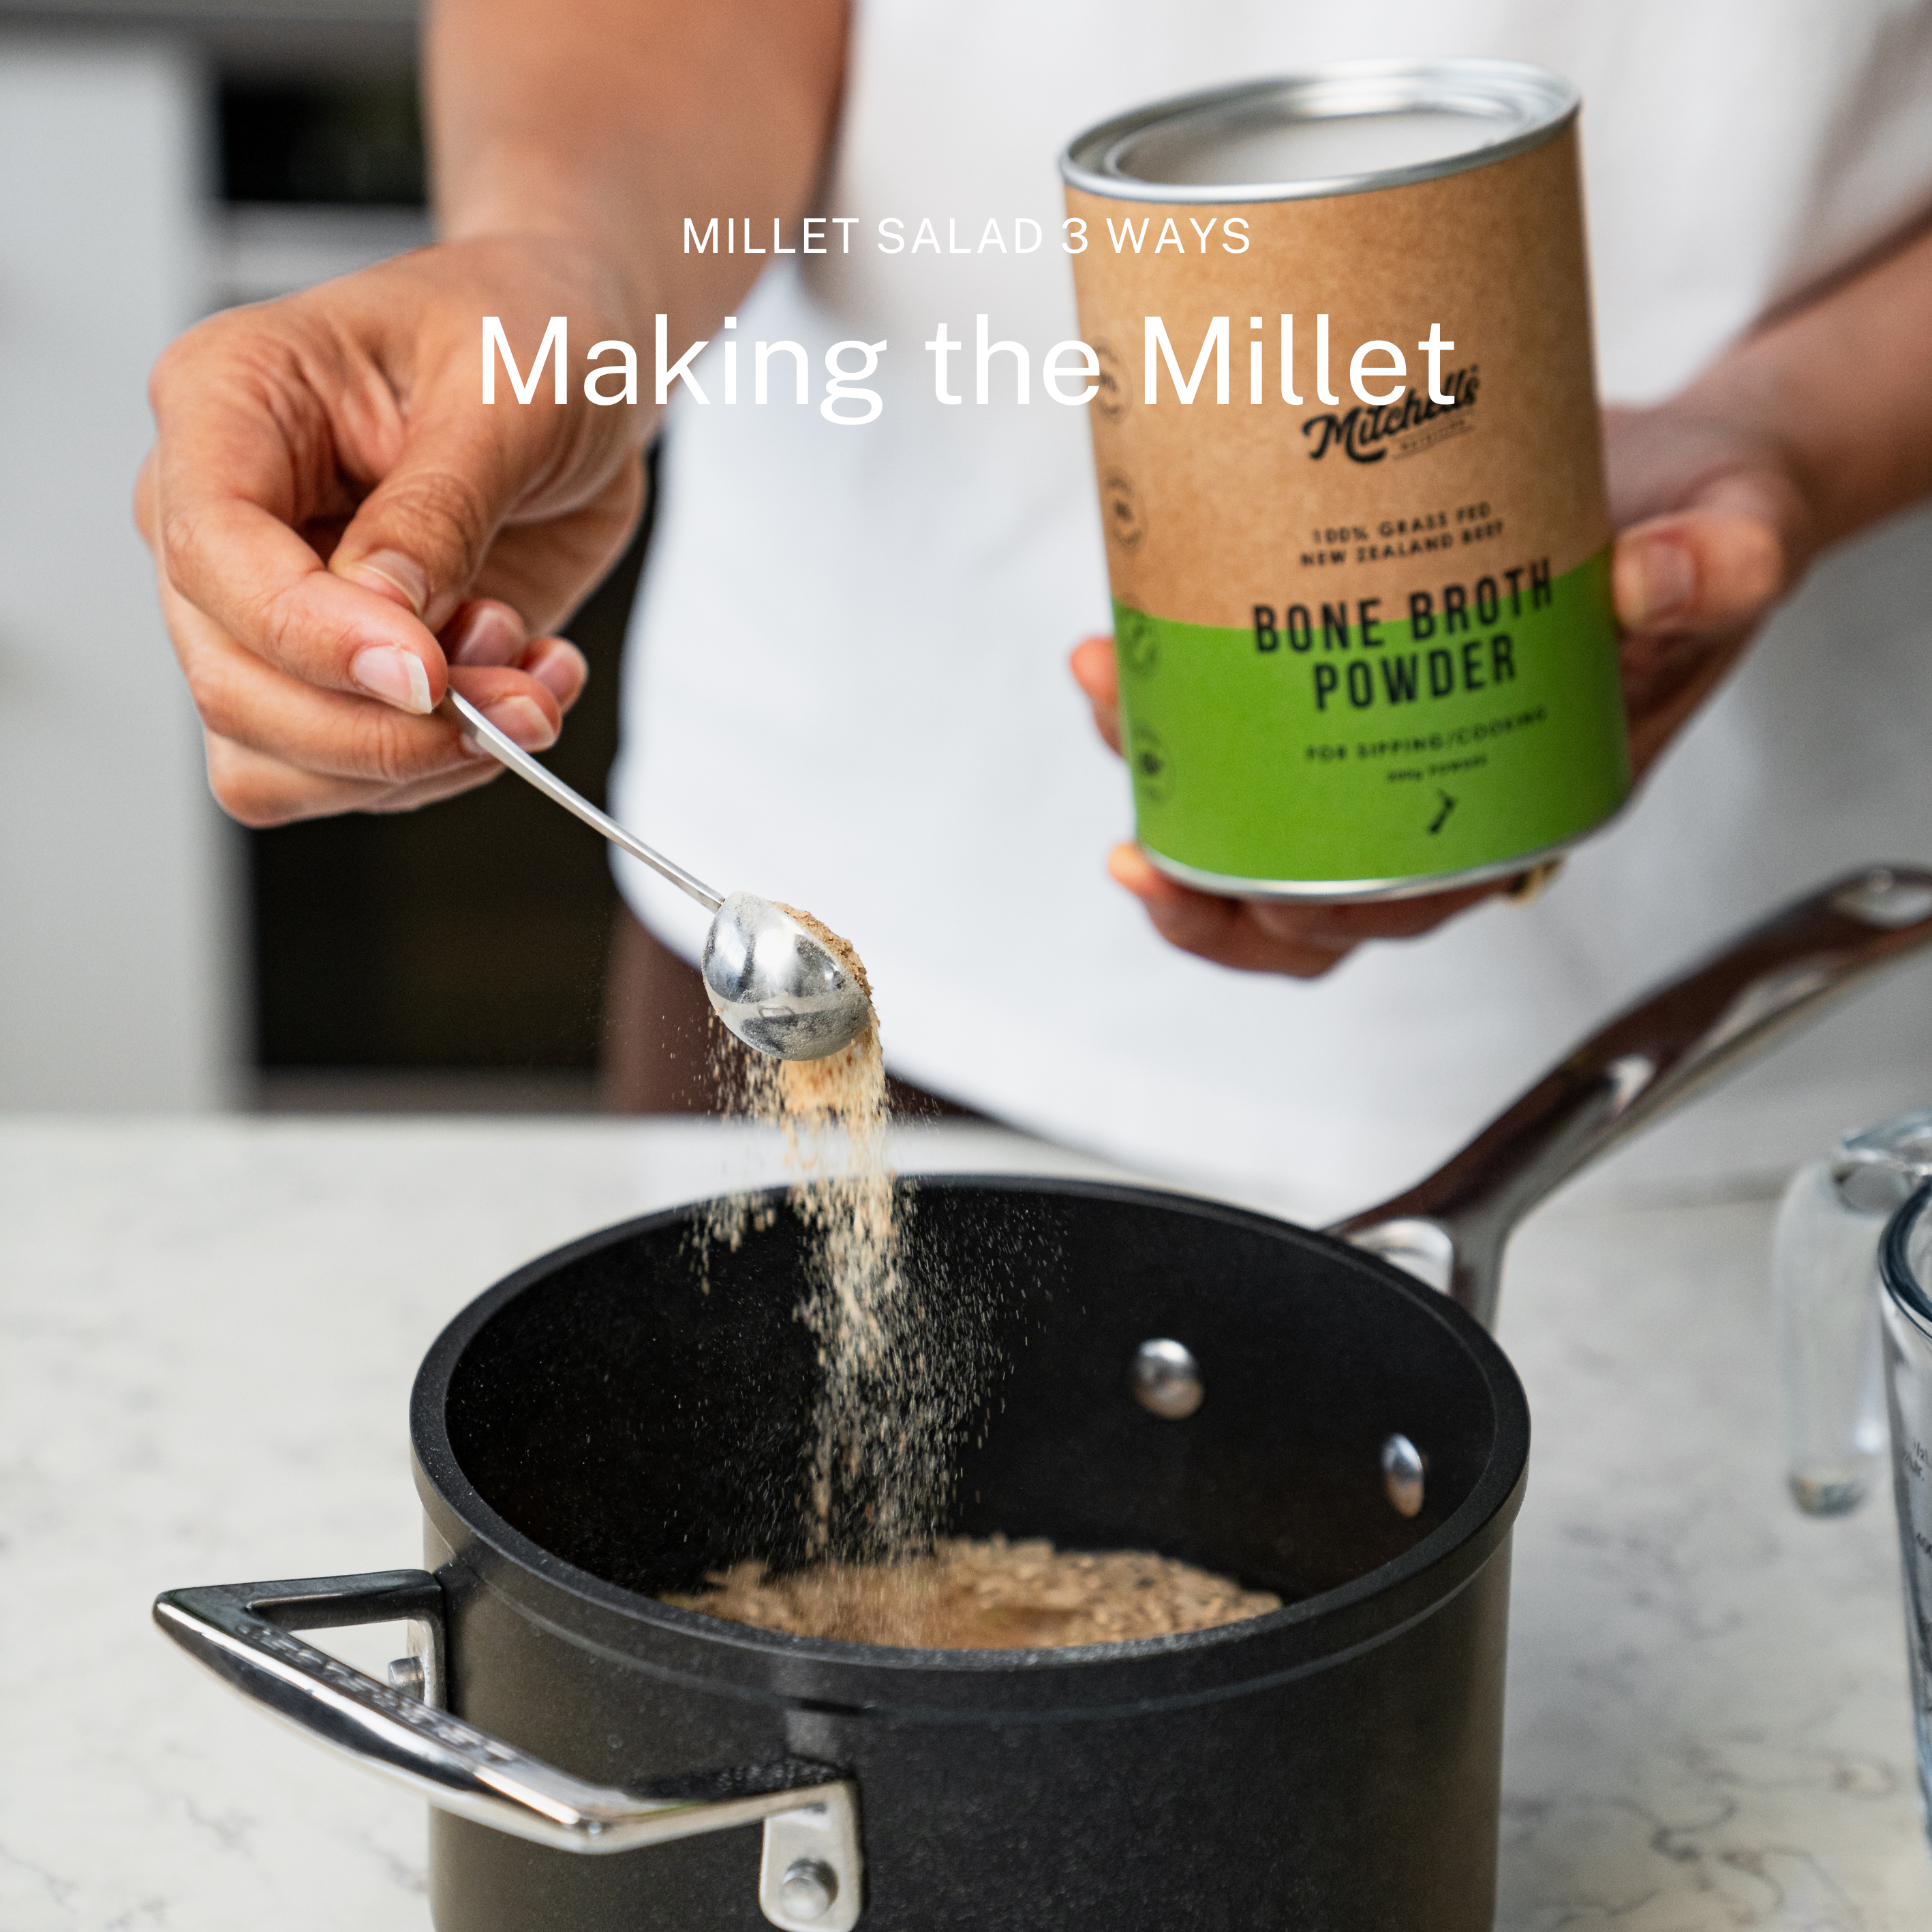 Mitchells Bone Broth Millet Recipe